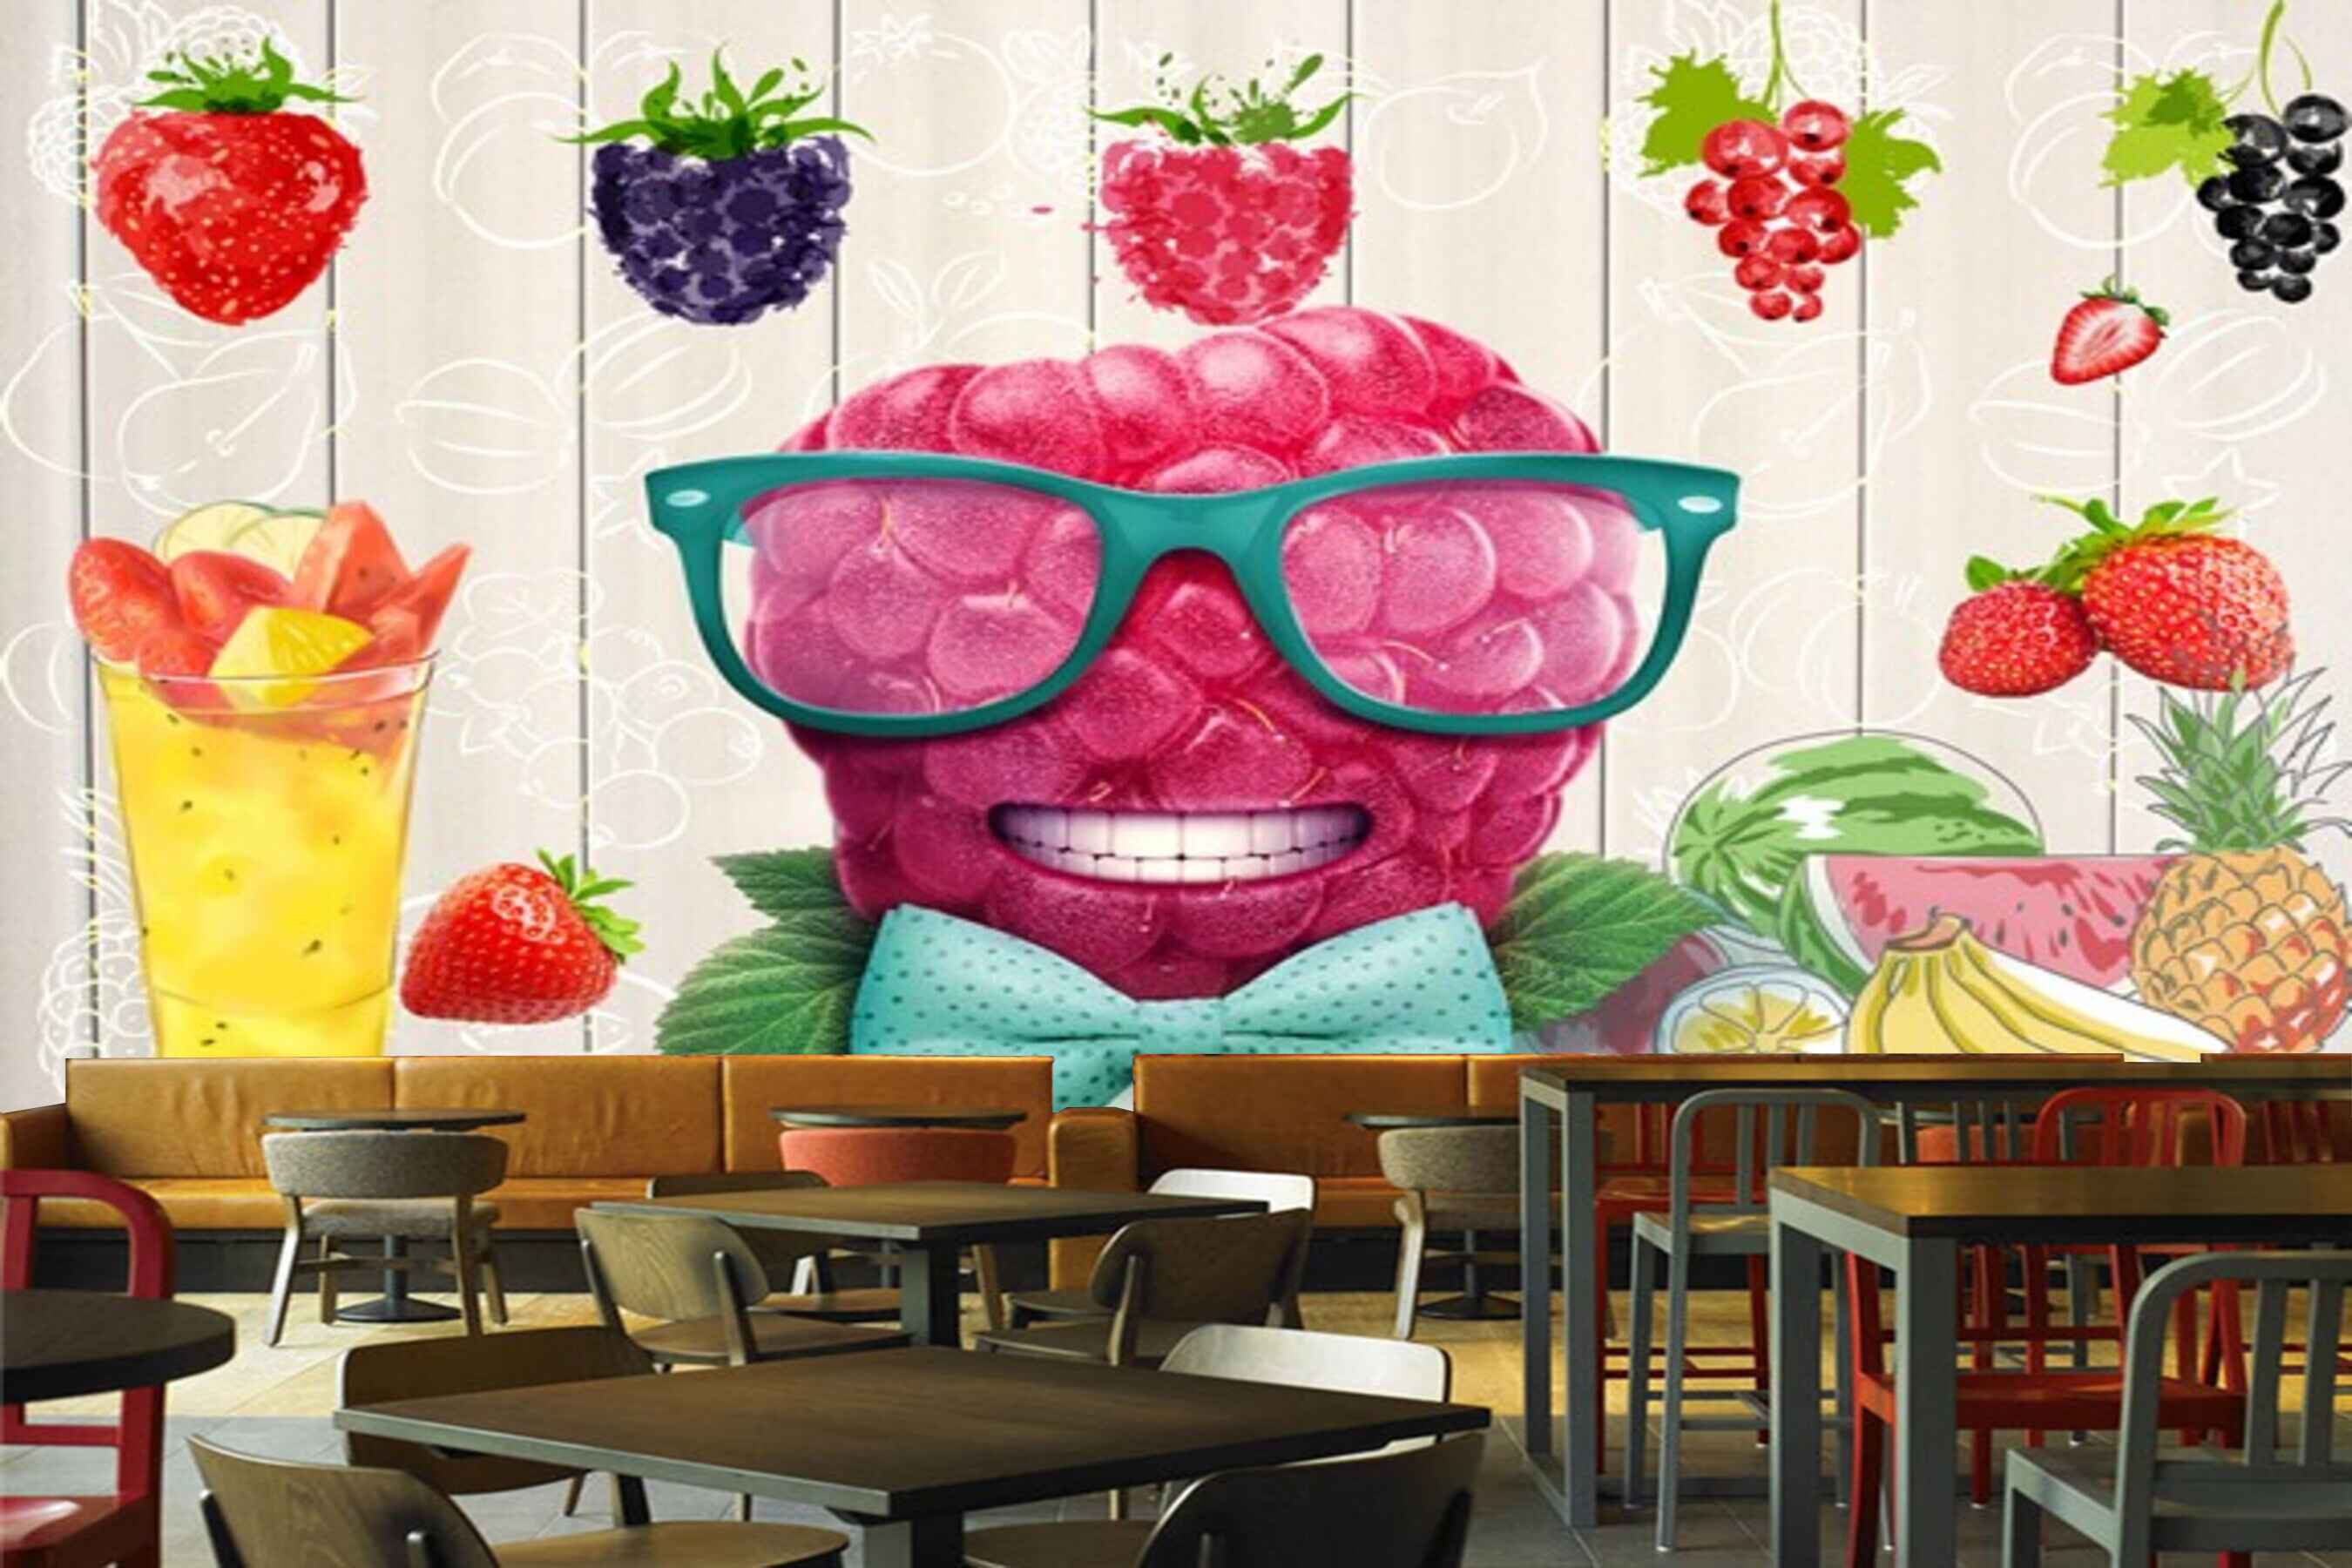 Avikalp MWZ3144 Strawberries Grapes Spectacles Drink Bananas HD Wallpaper for Cafe Restaurant